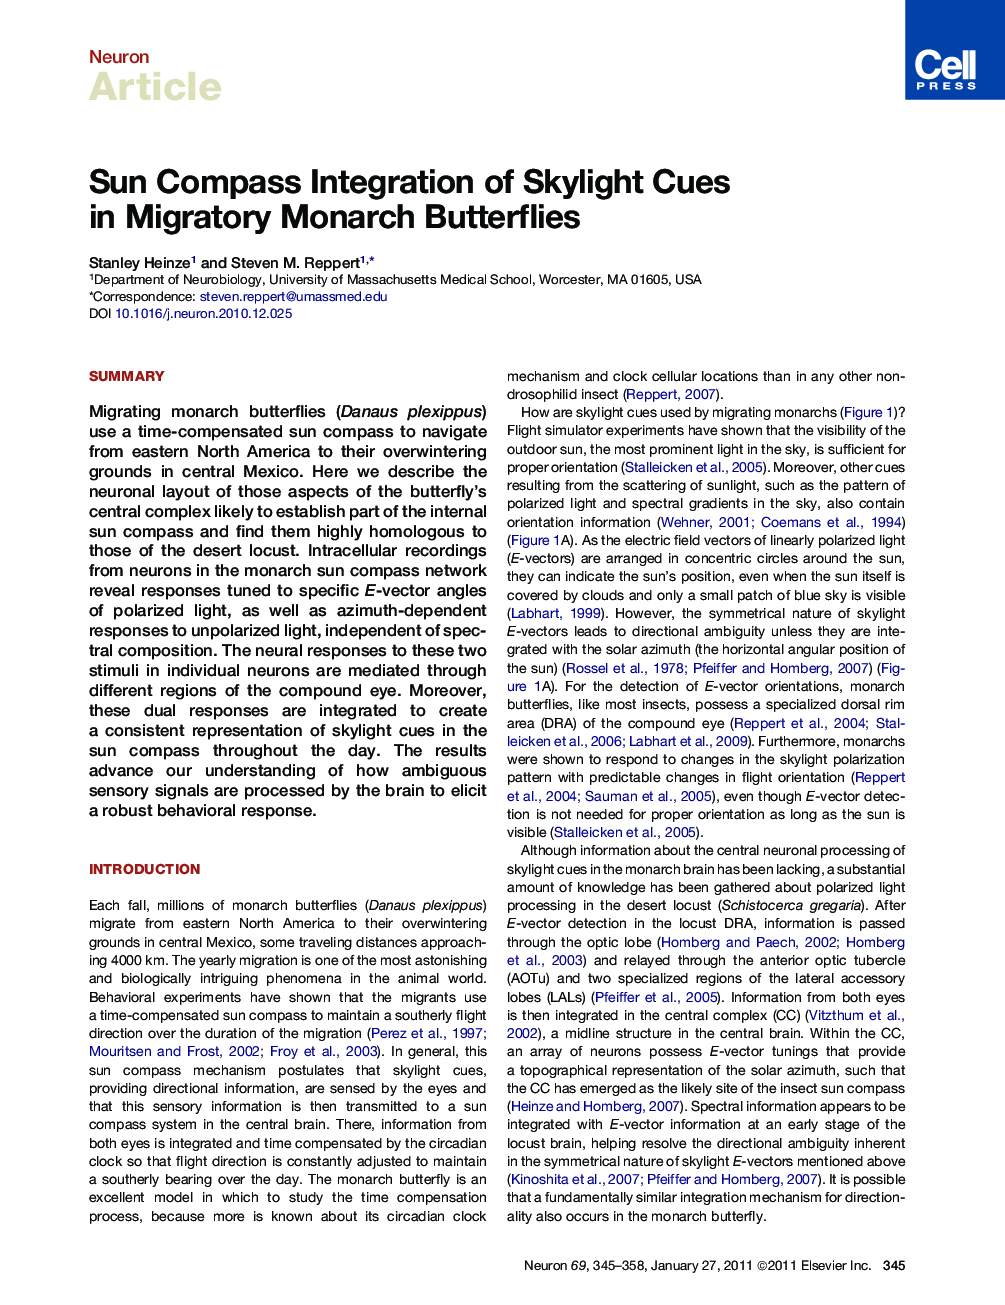 Sun Compass Integration of Skylight Cues in Migratory Monarch Butterflies